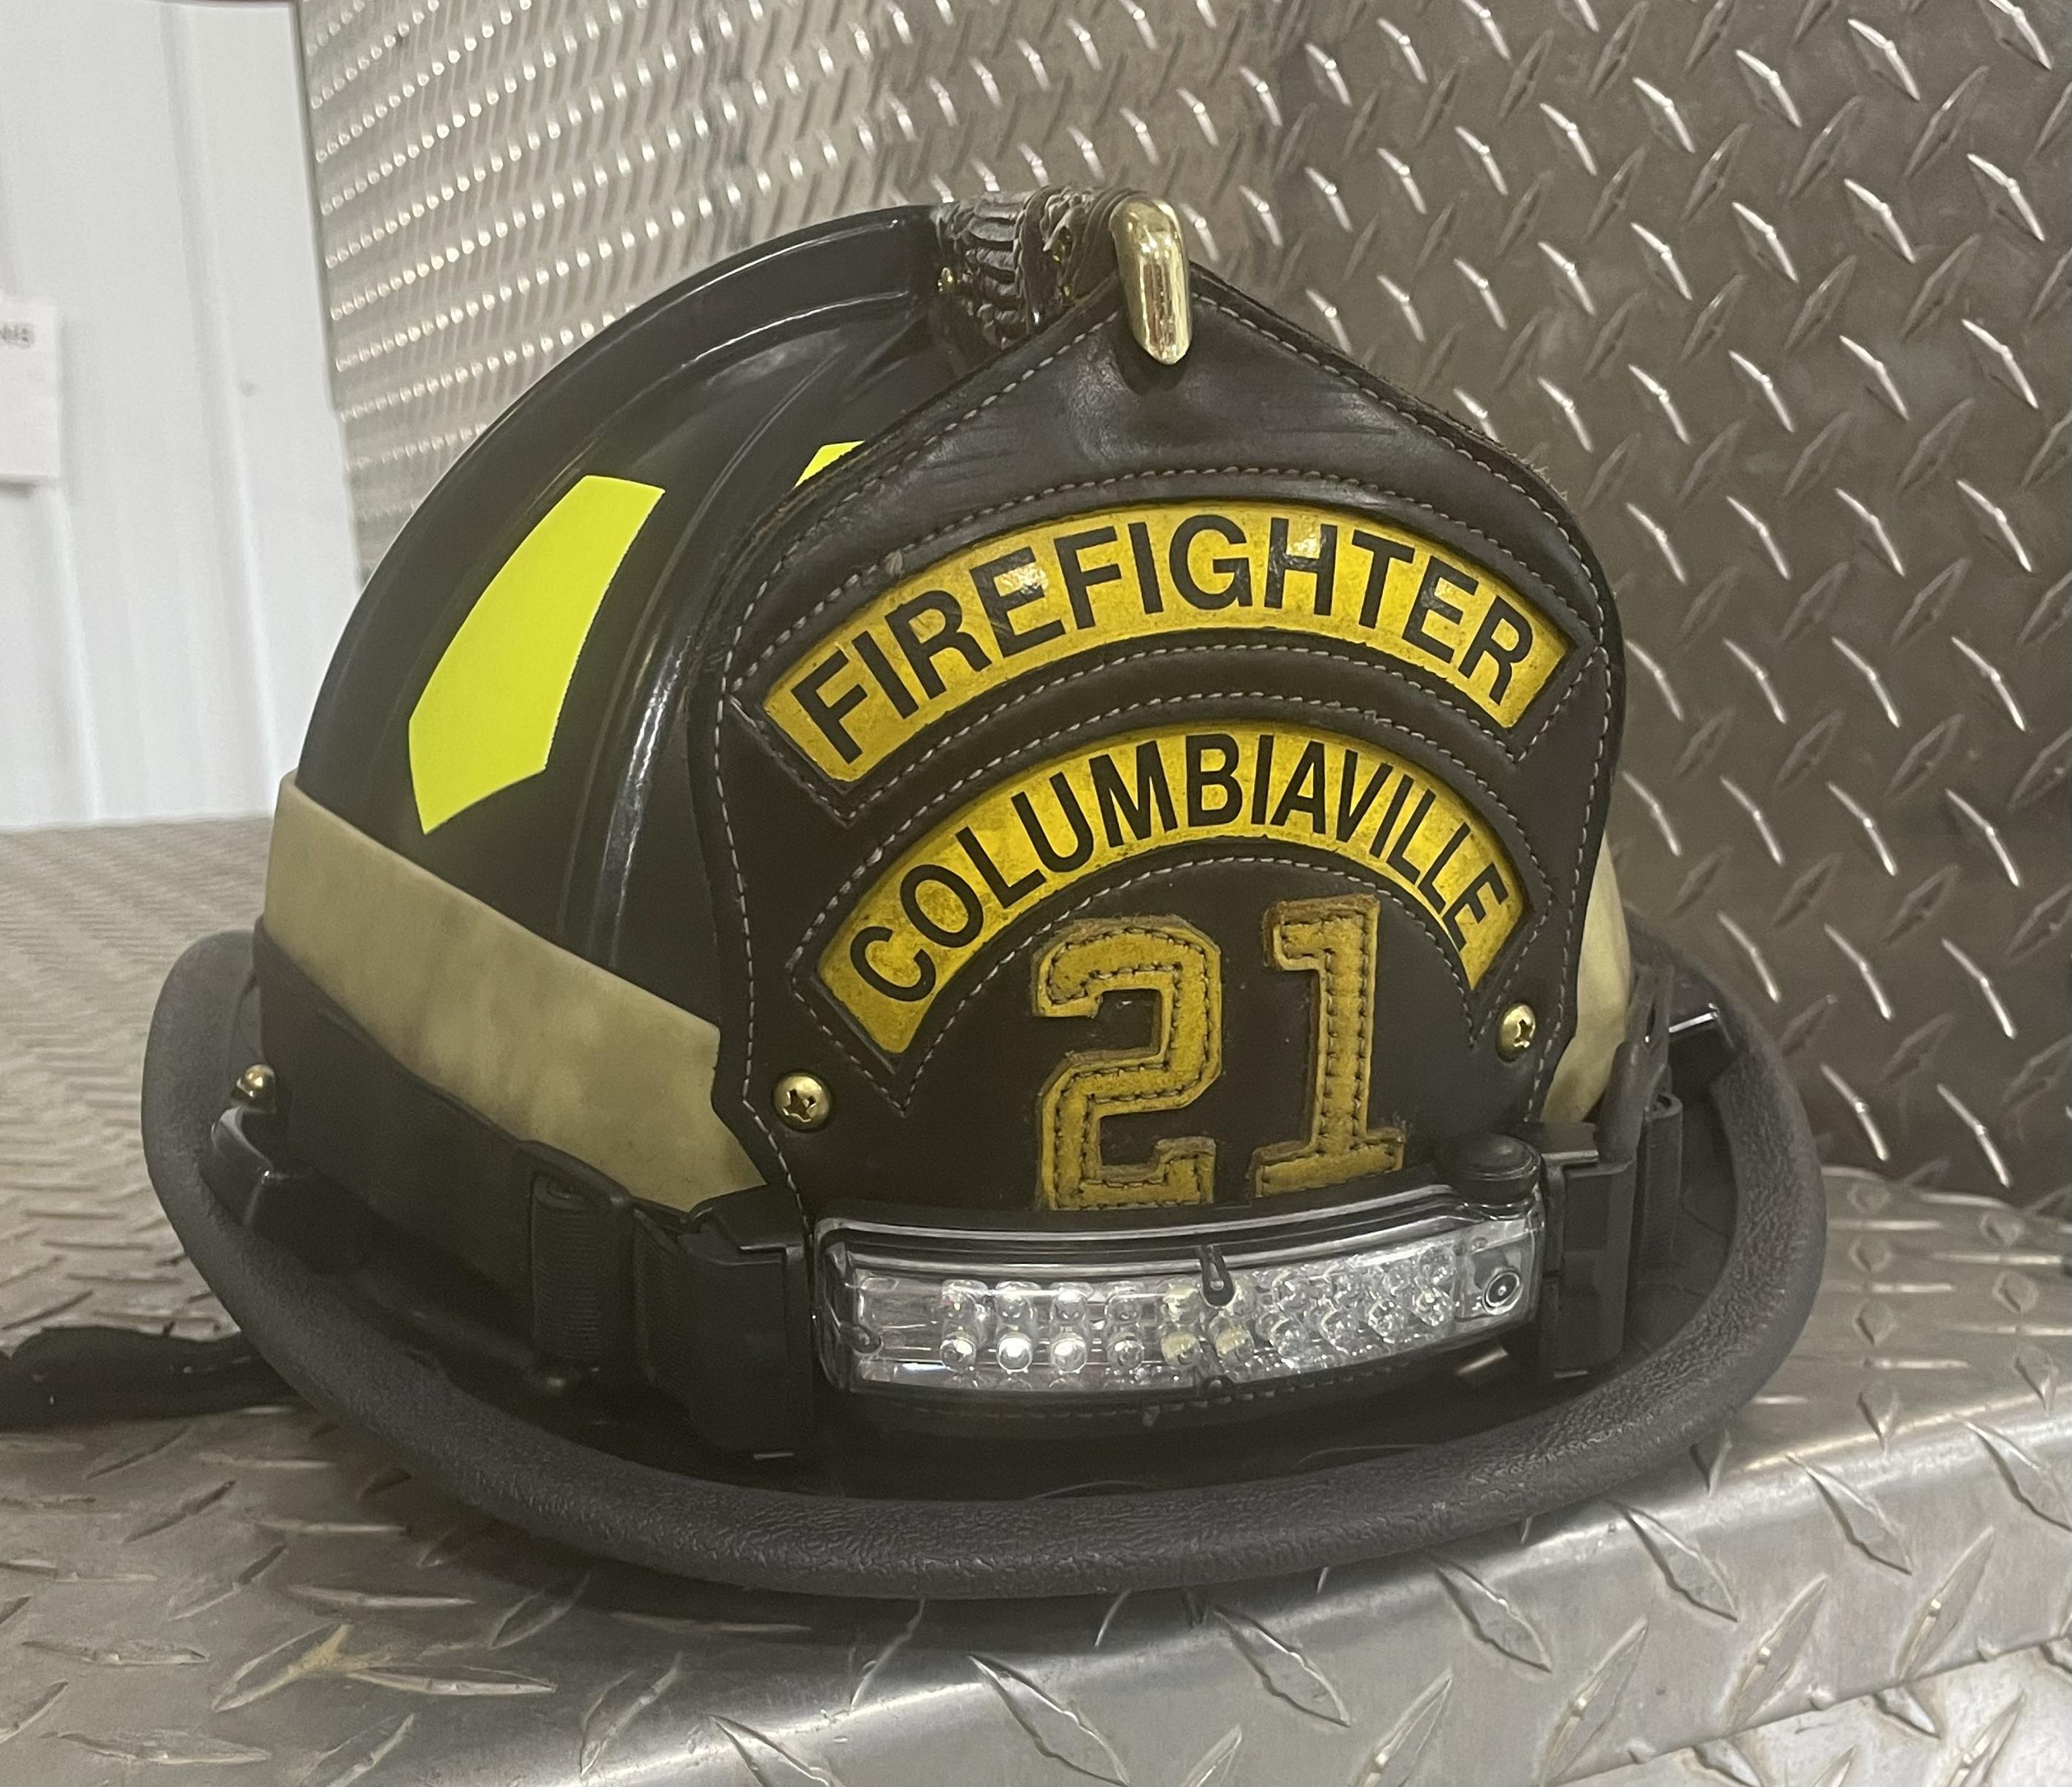 Columbiaville Firefighter hat